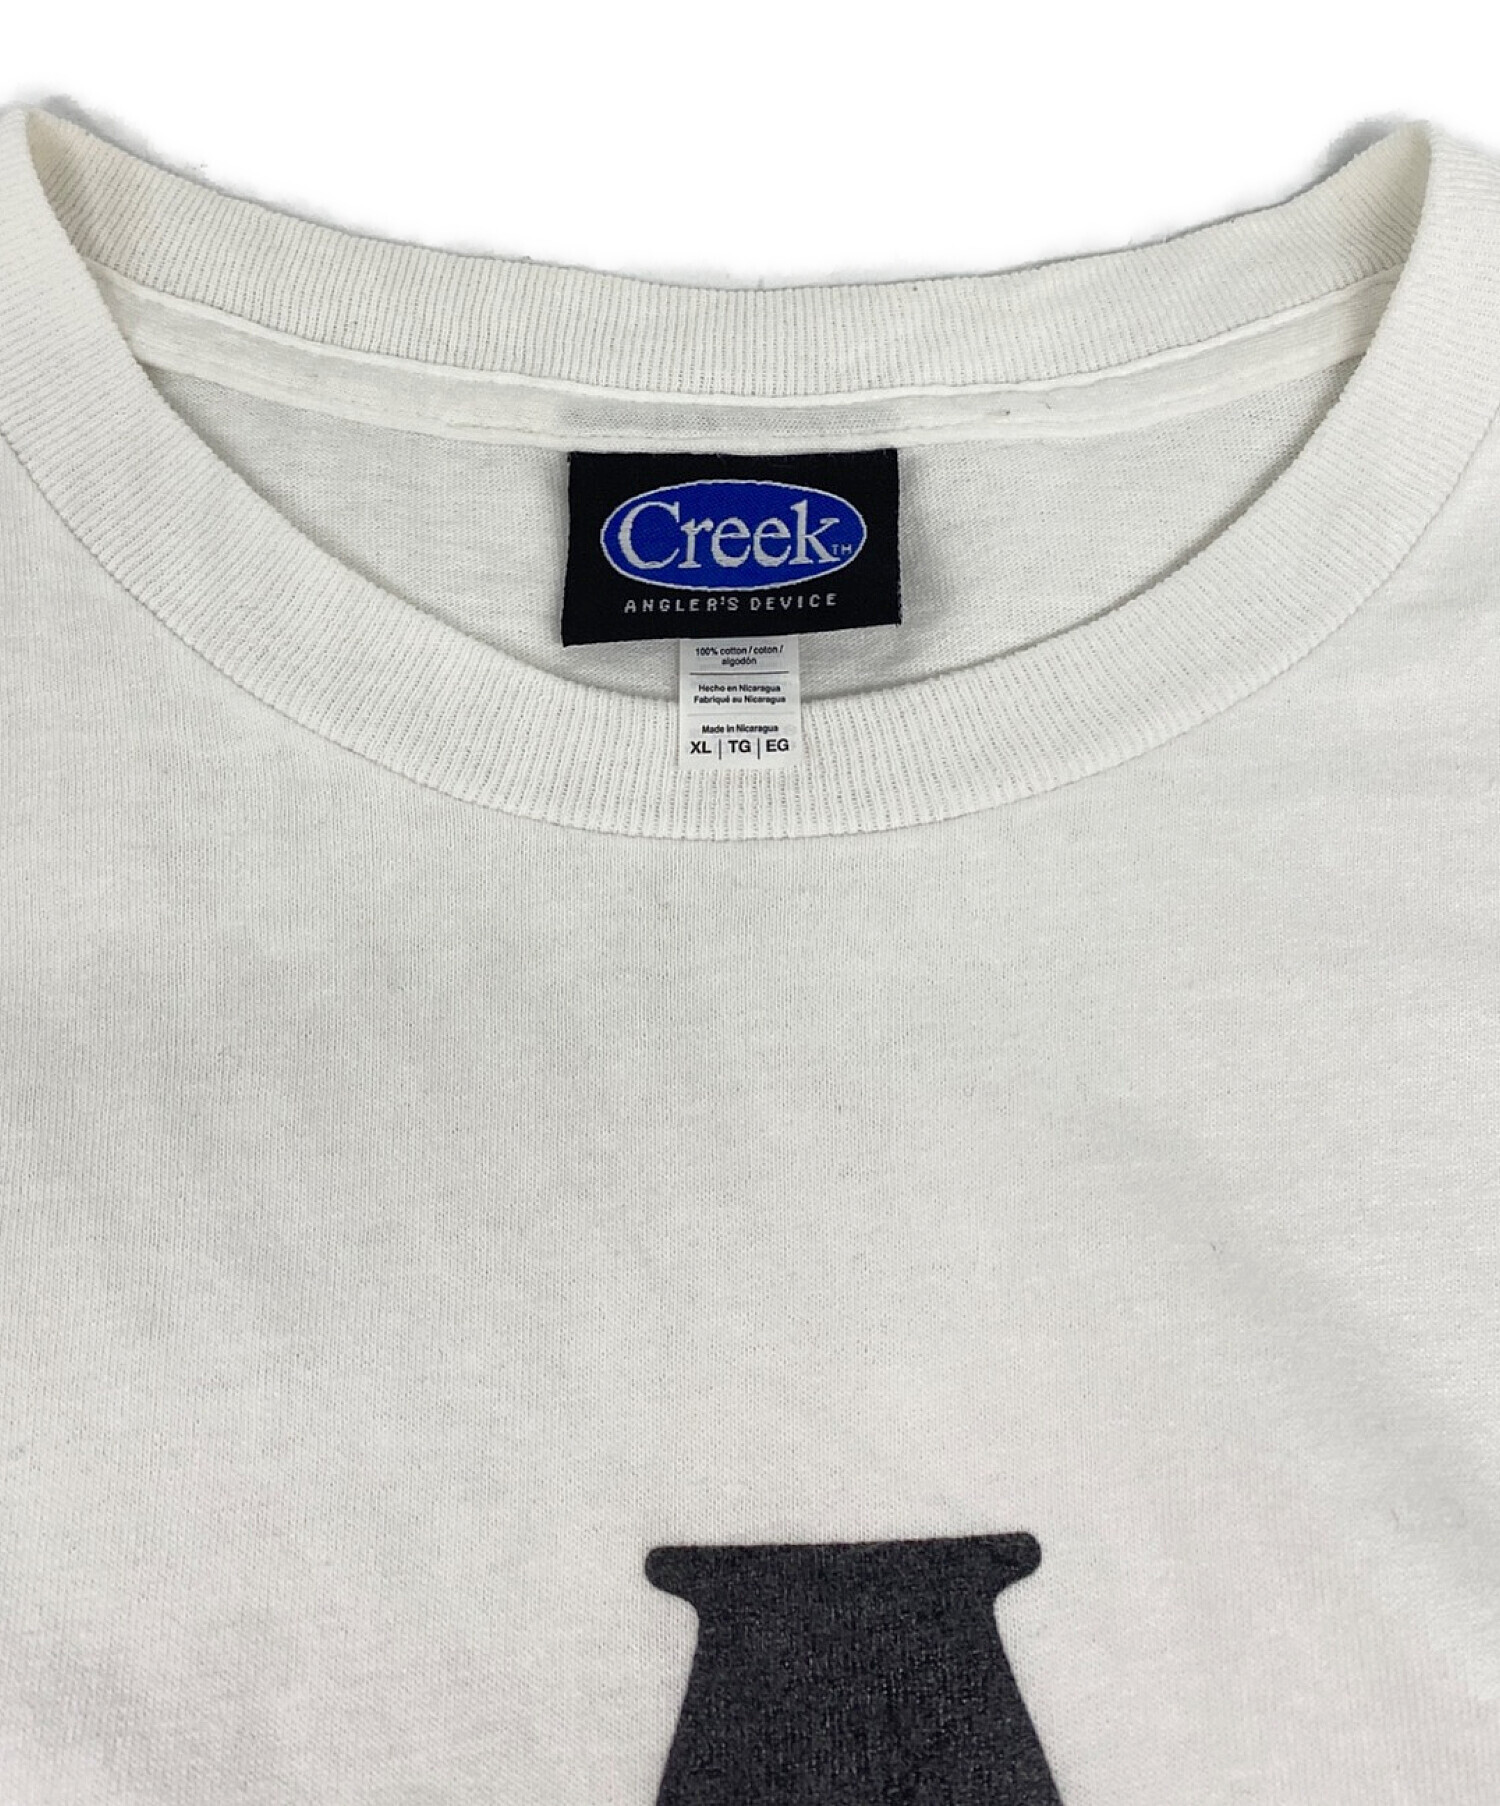 creek angler's device tシャツ XL ホワイト